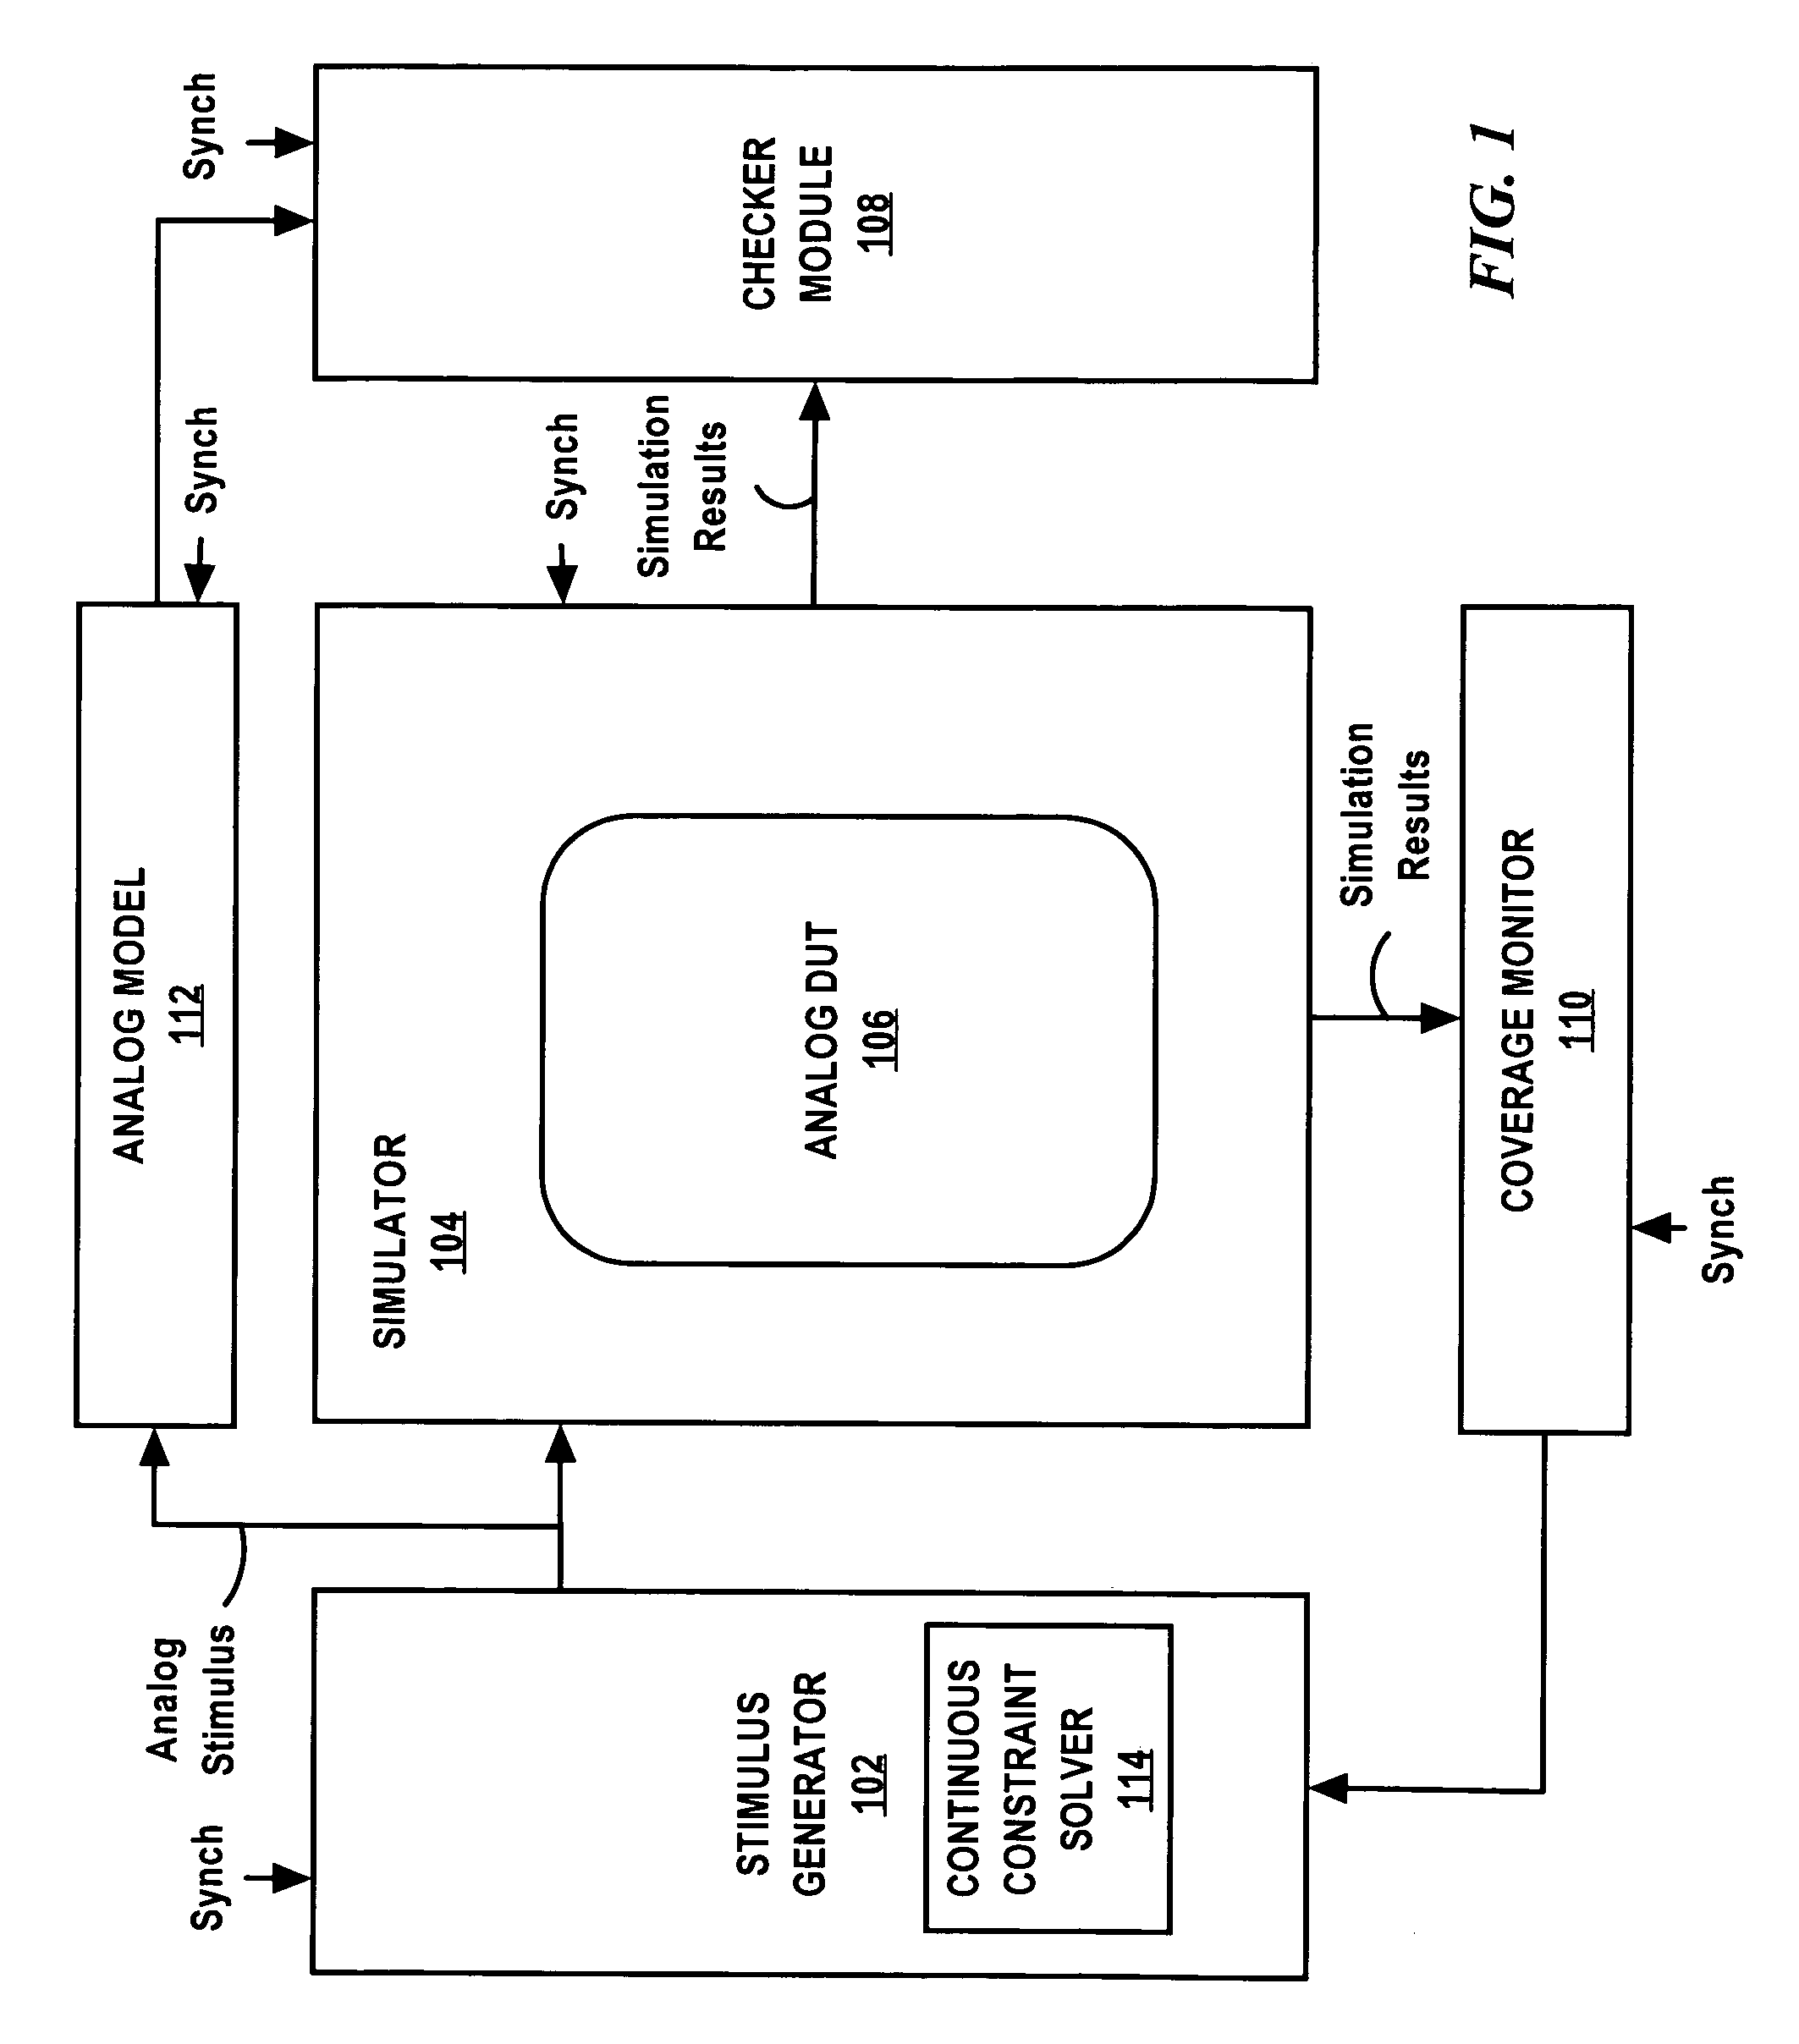 Method to analyze an analog circuit design with a verification program